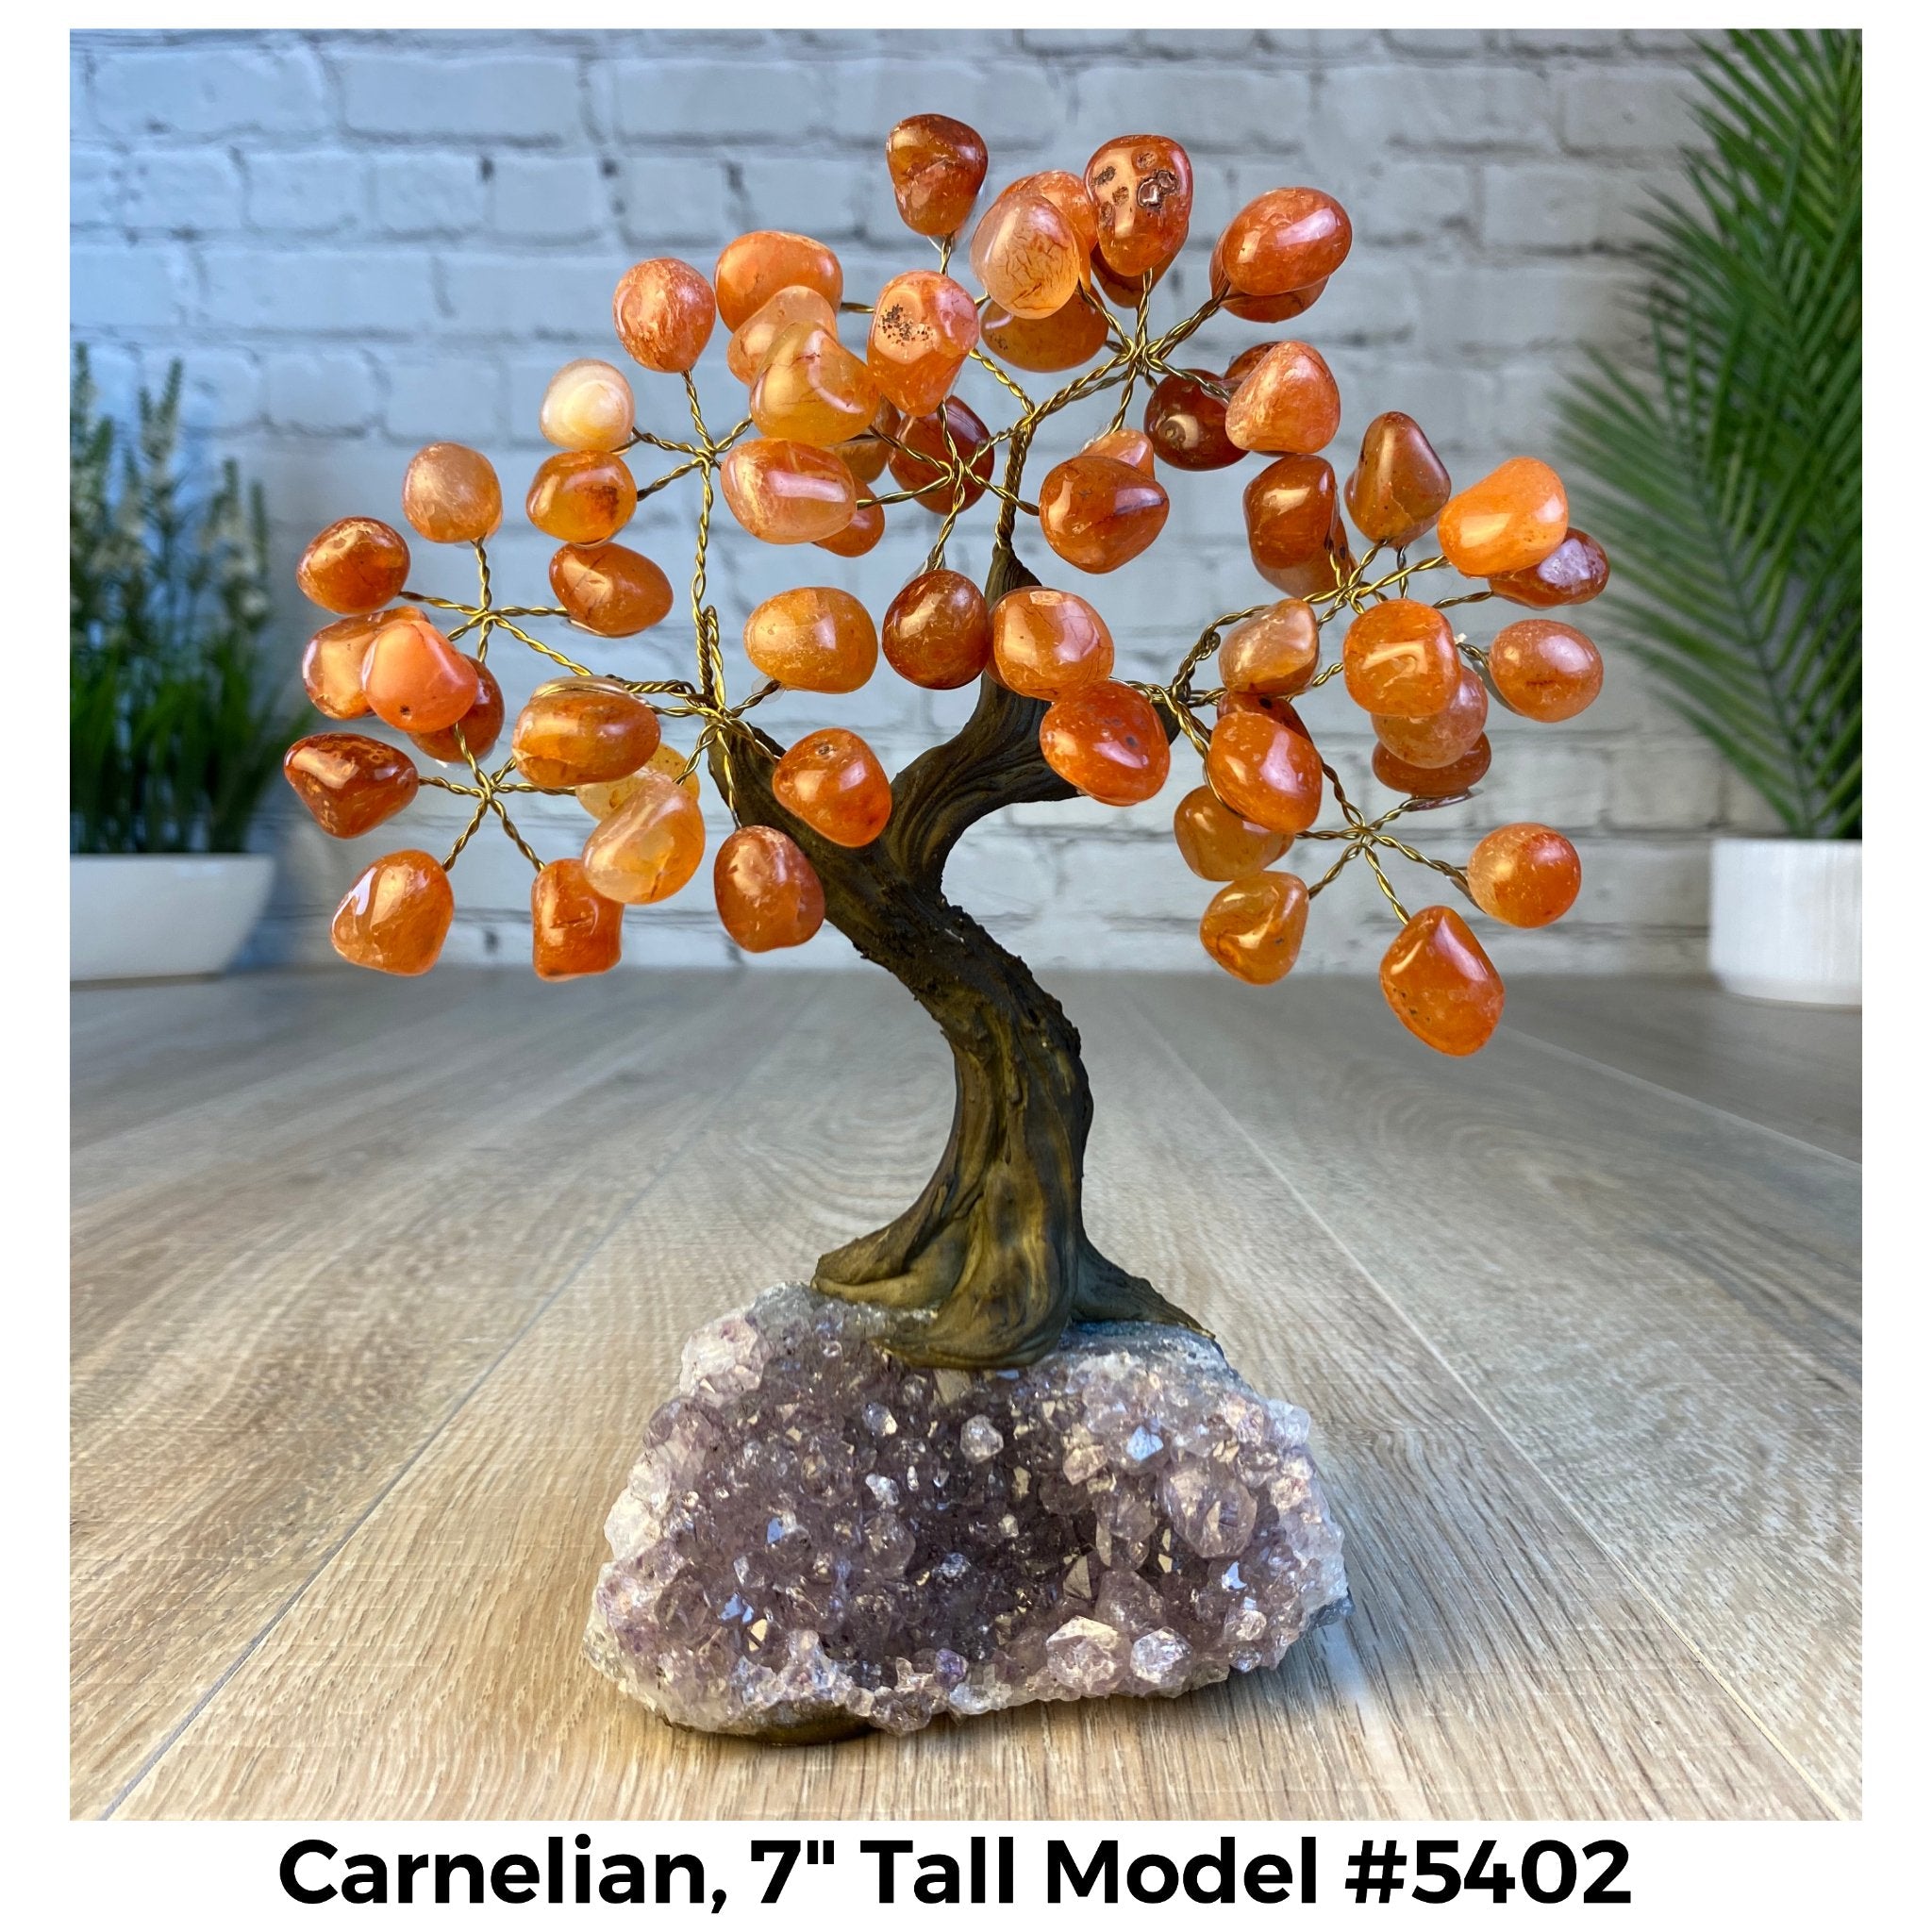 Carnelian 7" Tall Handmade Gemstone Tree on a Crystal base, 60 Gems #5402CARN - Brazil GemsBrazil GemsCarnelian 7" Tall Handmade Gemstone Tree on a Crystal base, 60 Gems #5402CARNGemstone Trees5402CARN